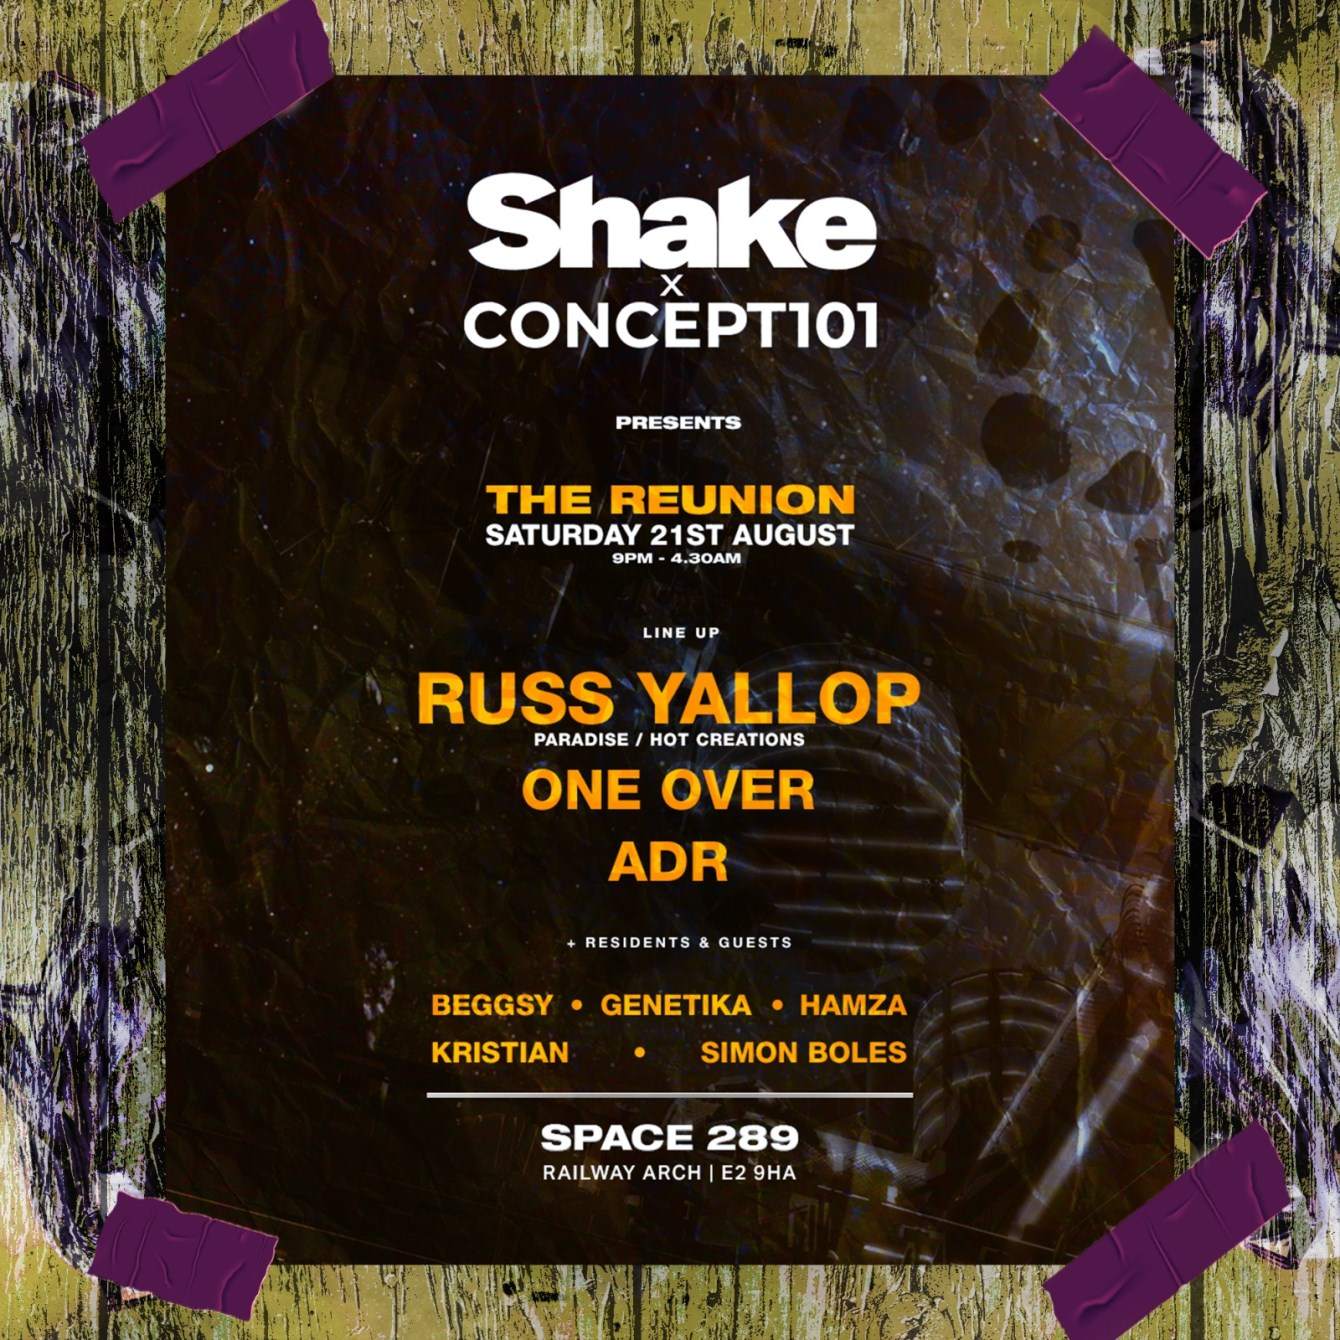 Shake x Concept101 W/ Russ Yallop - Página frontal